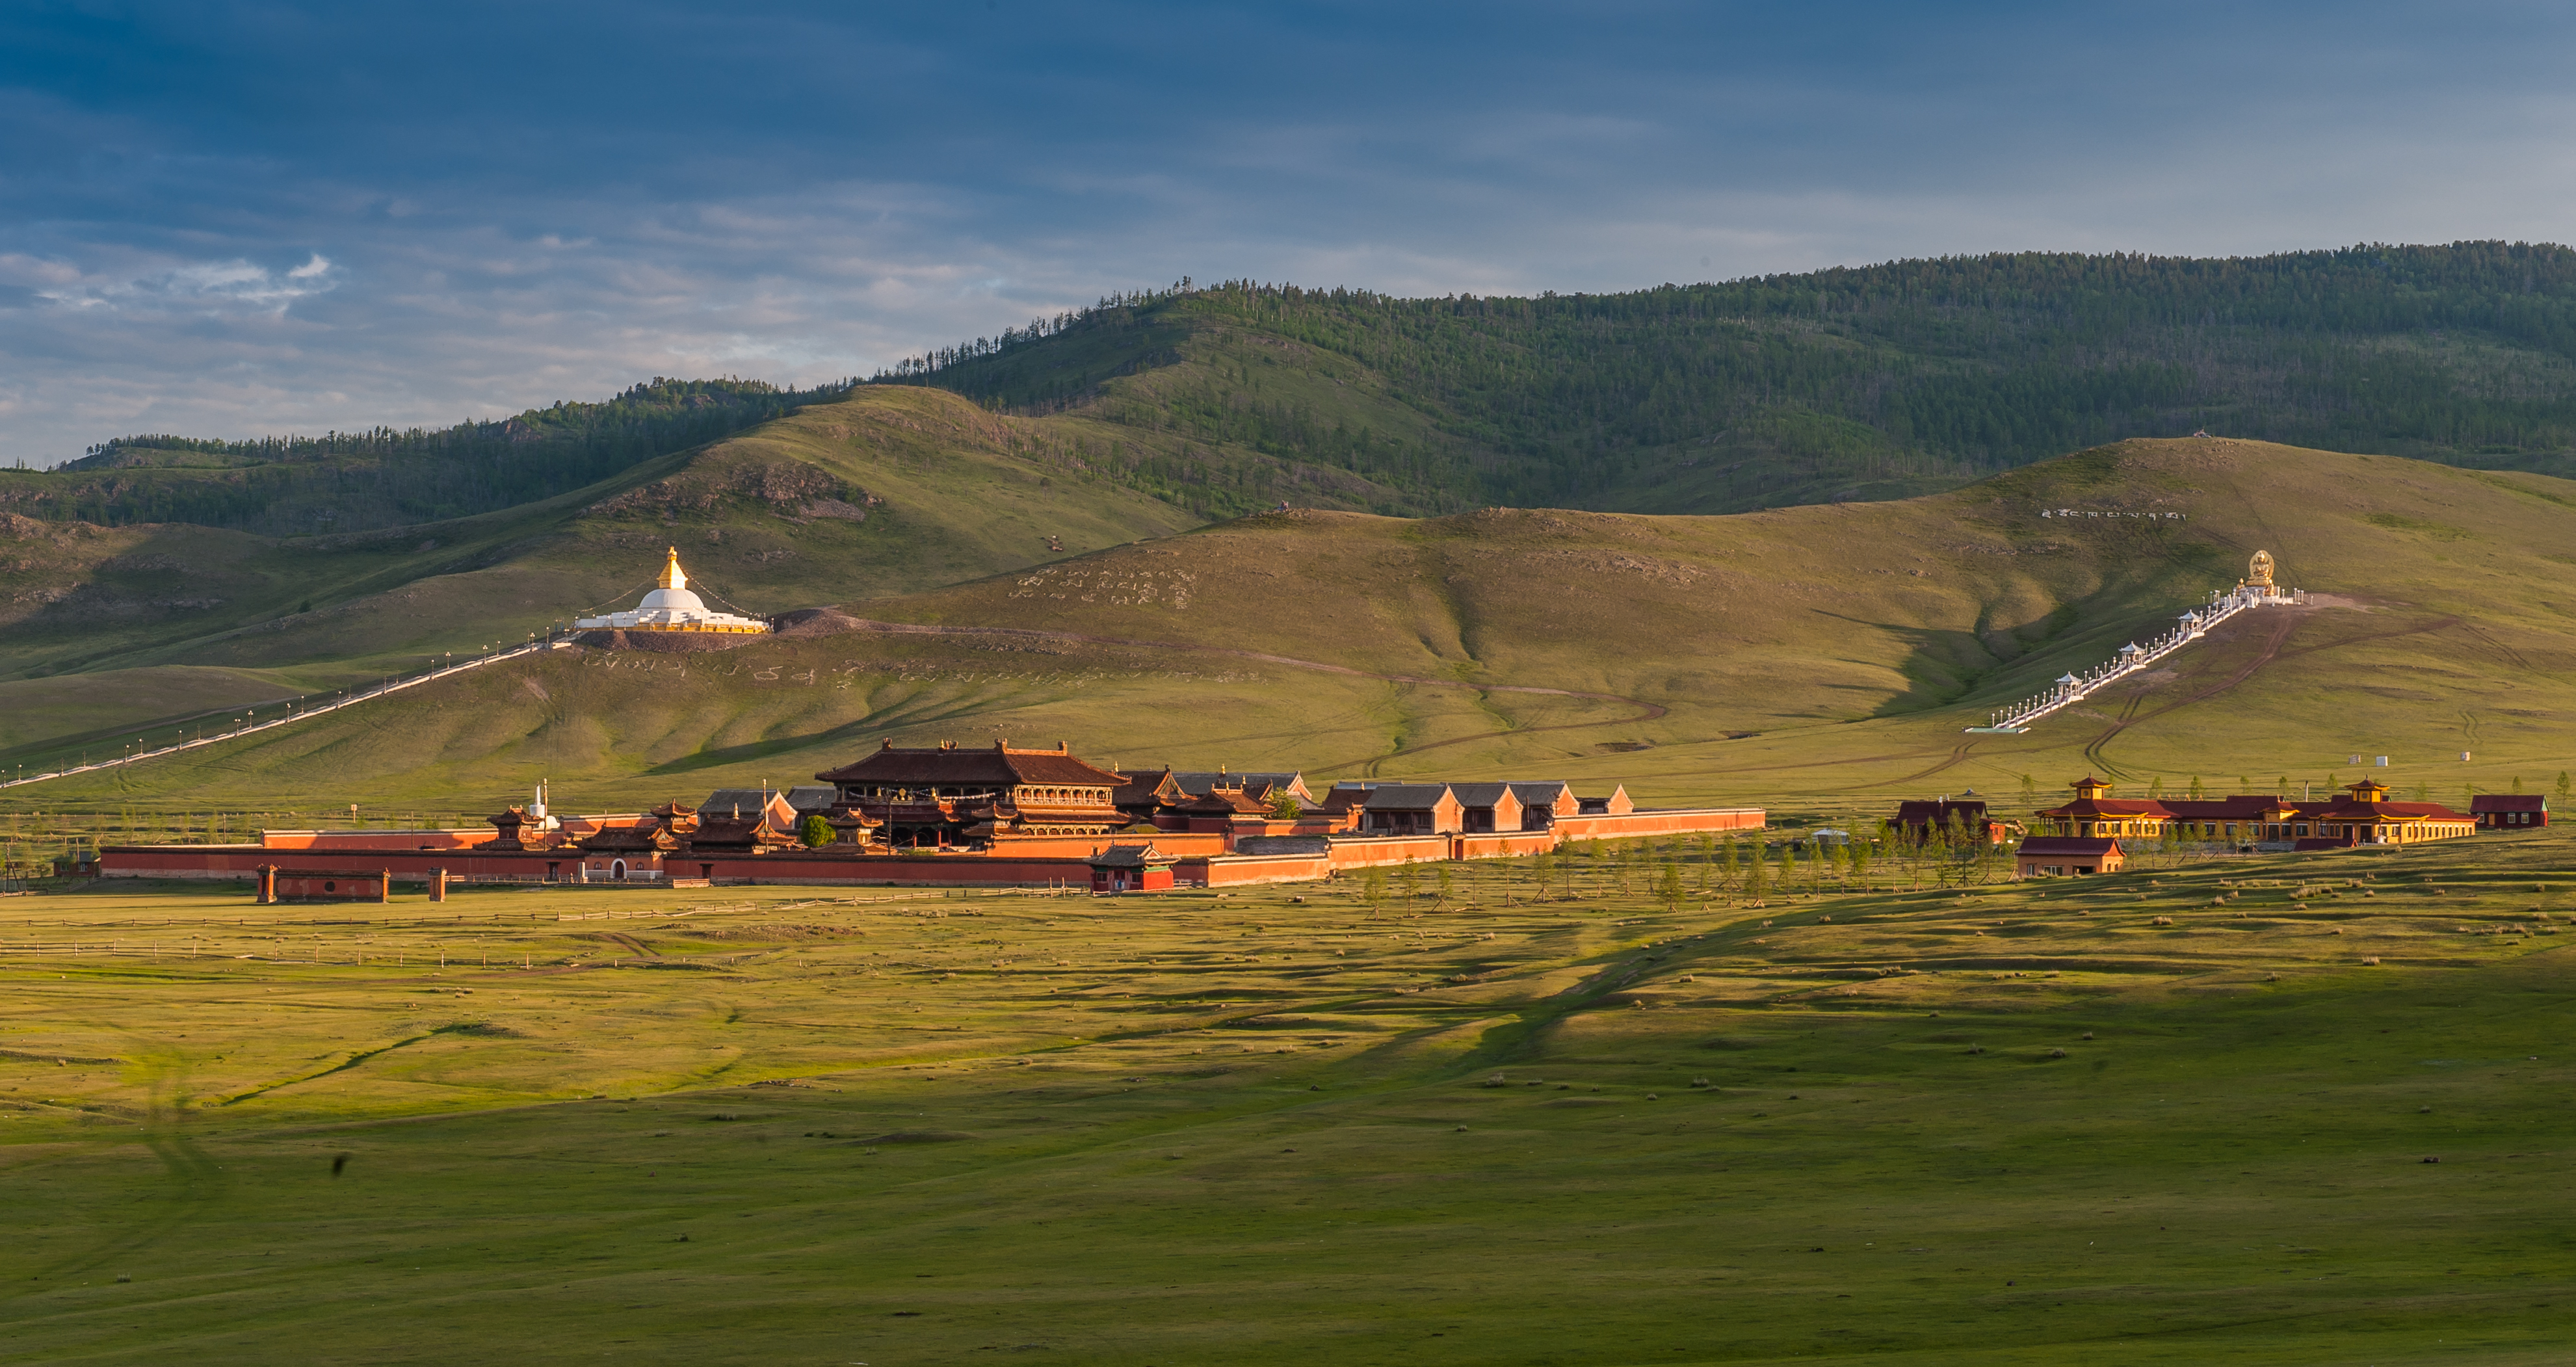 juulchin tourism corporation of mongolia